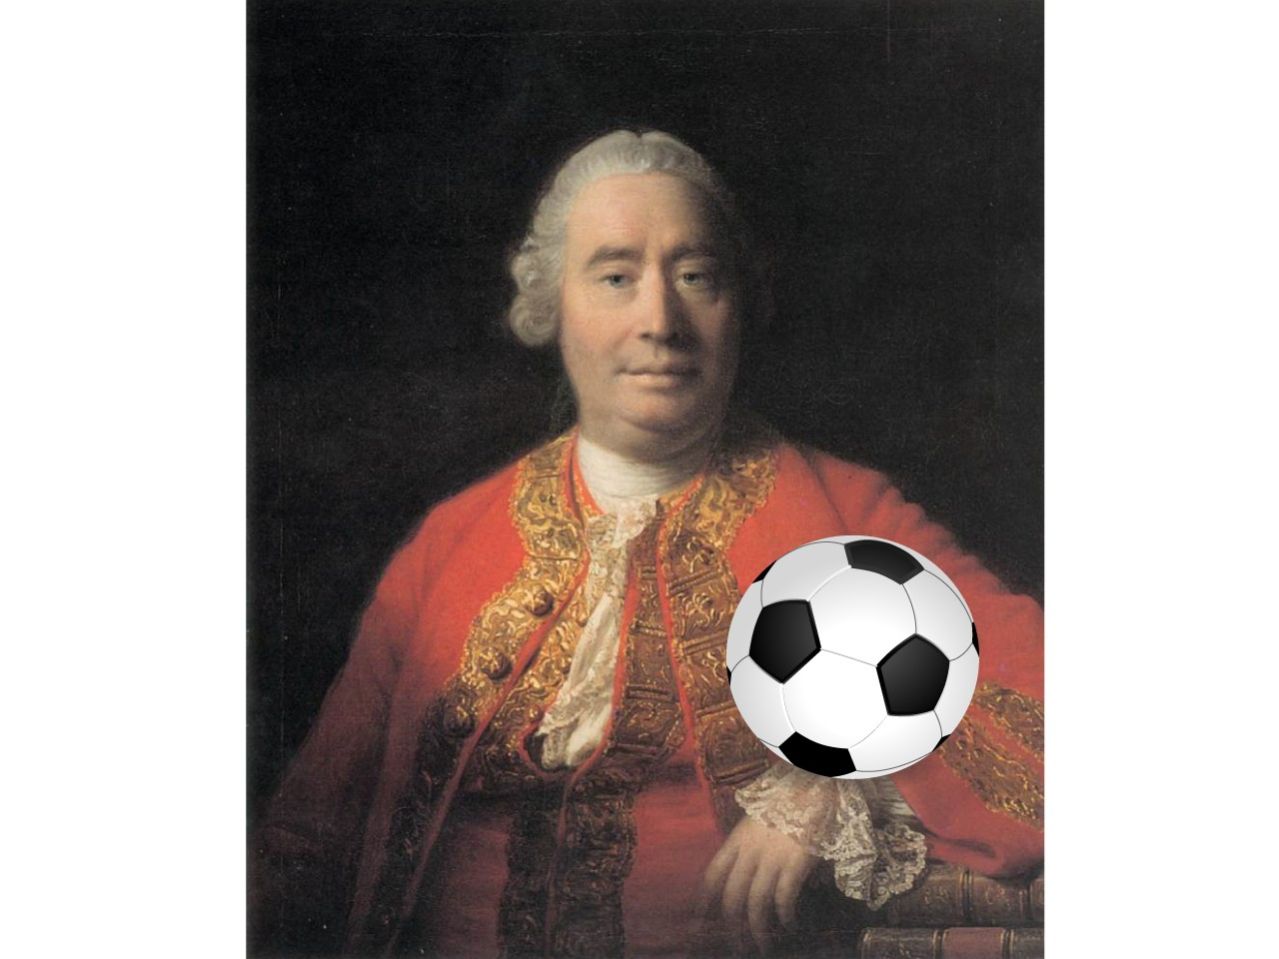 David Hume by Allan Ramsay (plus football)